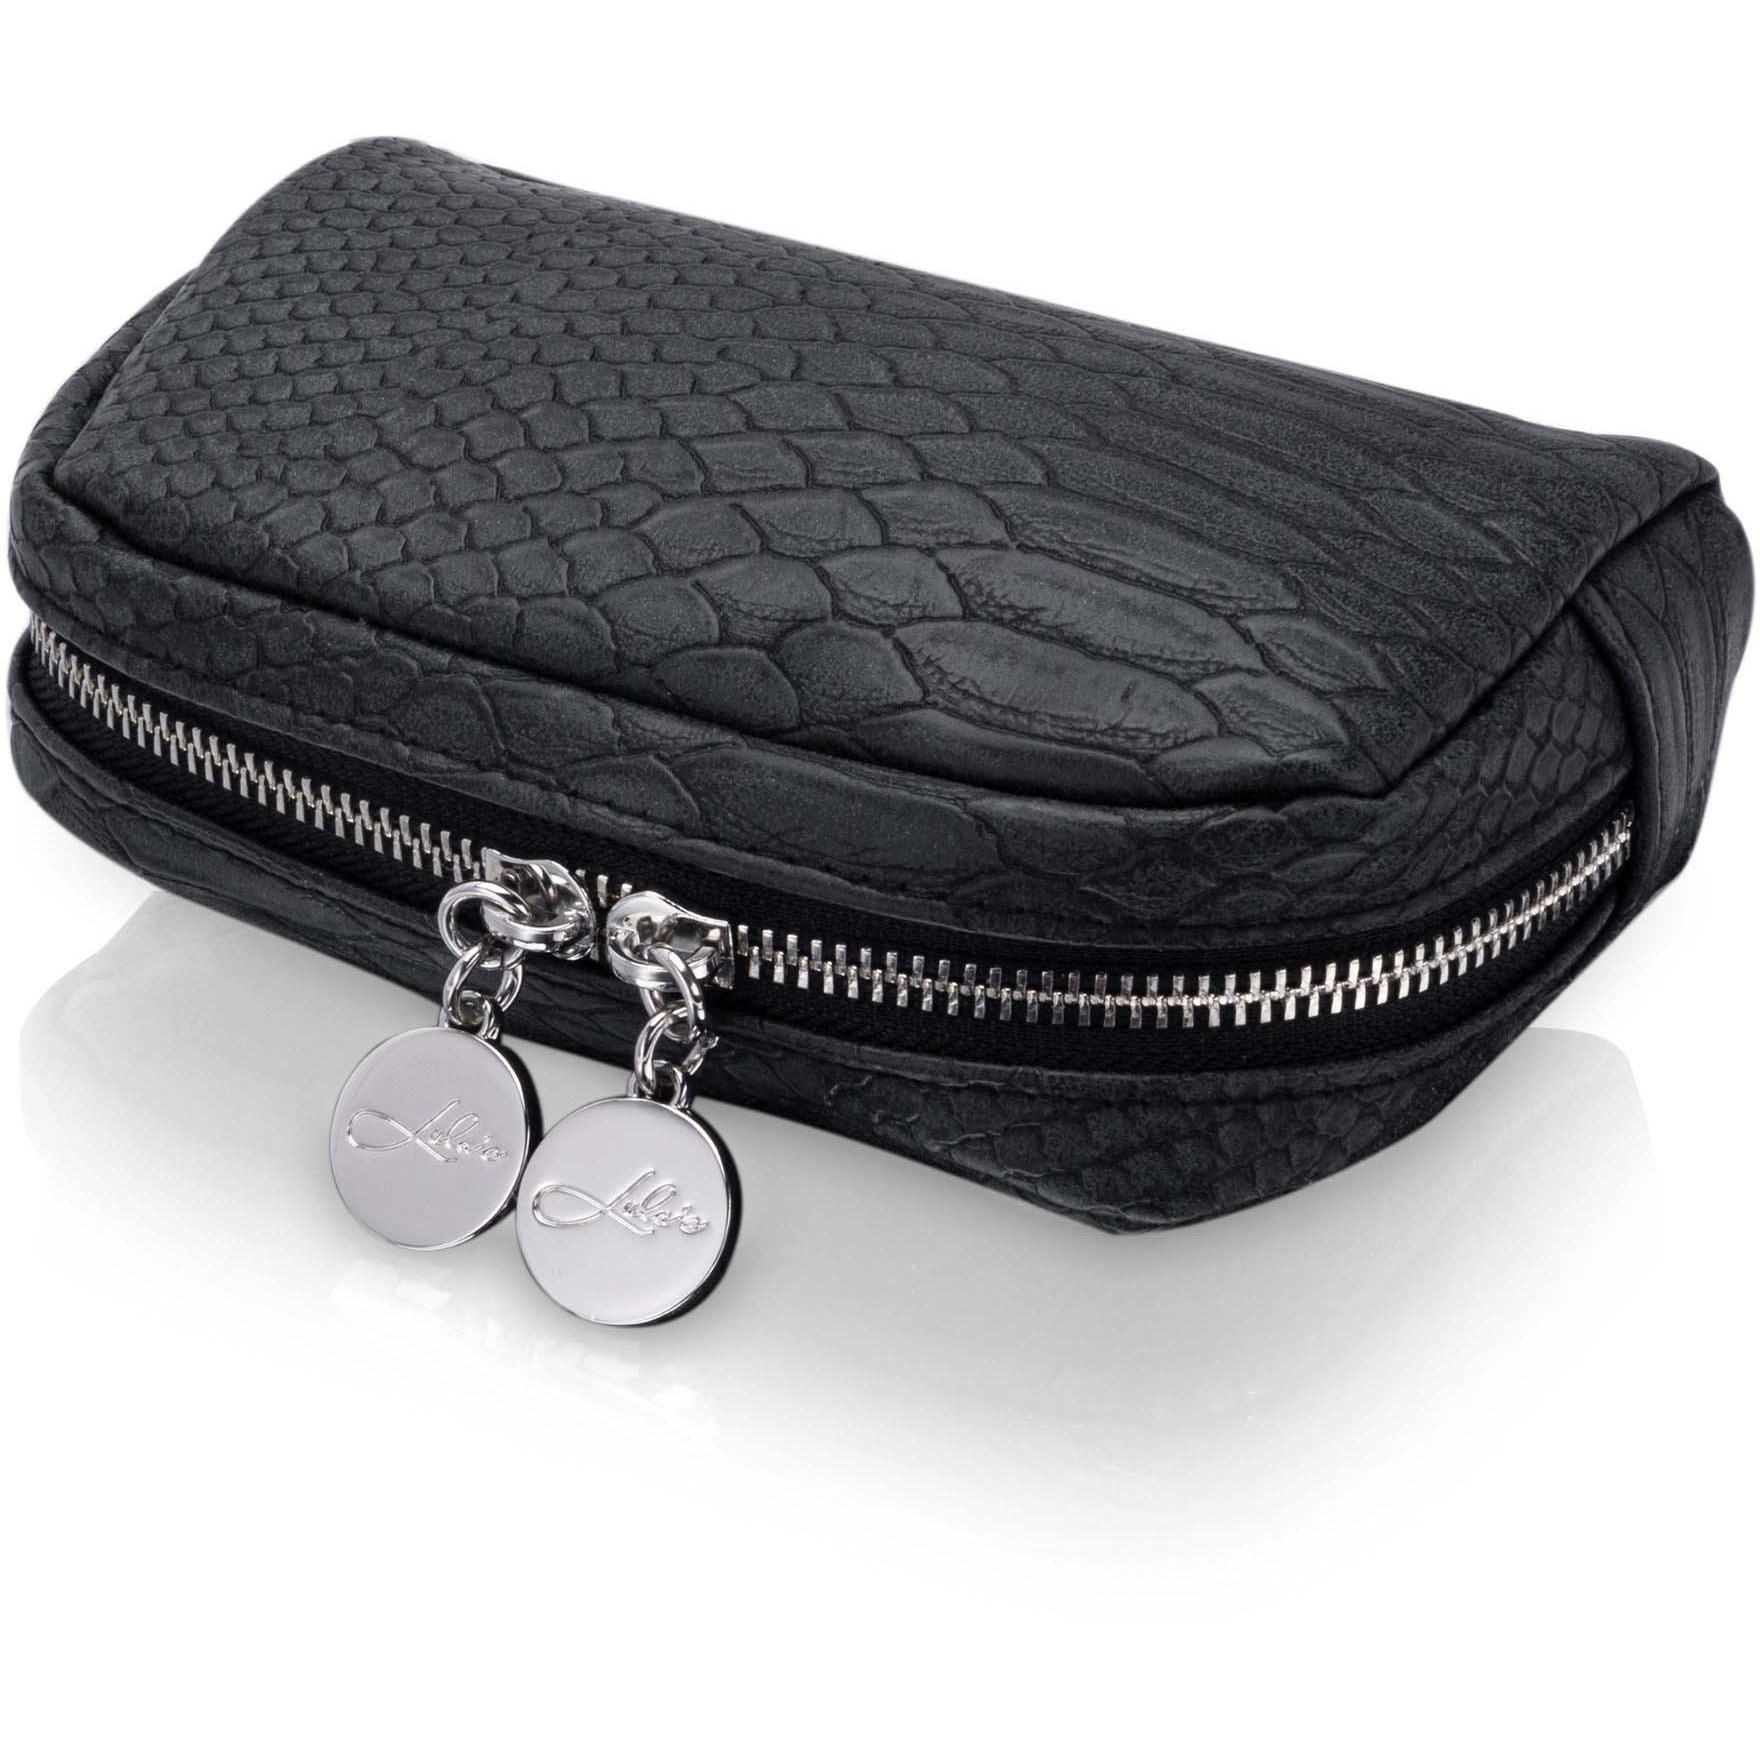 Bilde av Lulu's Accessories Cosmetic Bag Mini Brushed Black